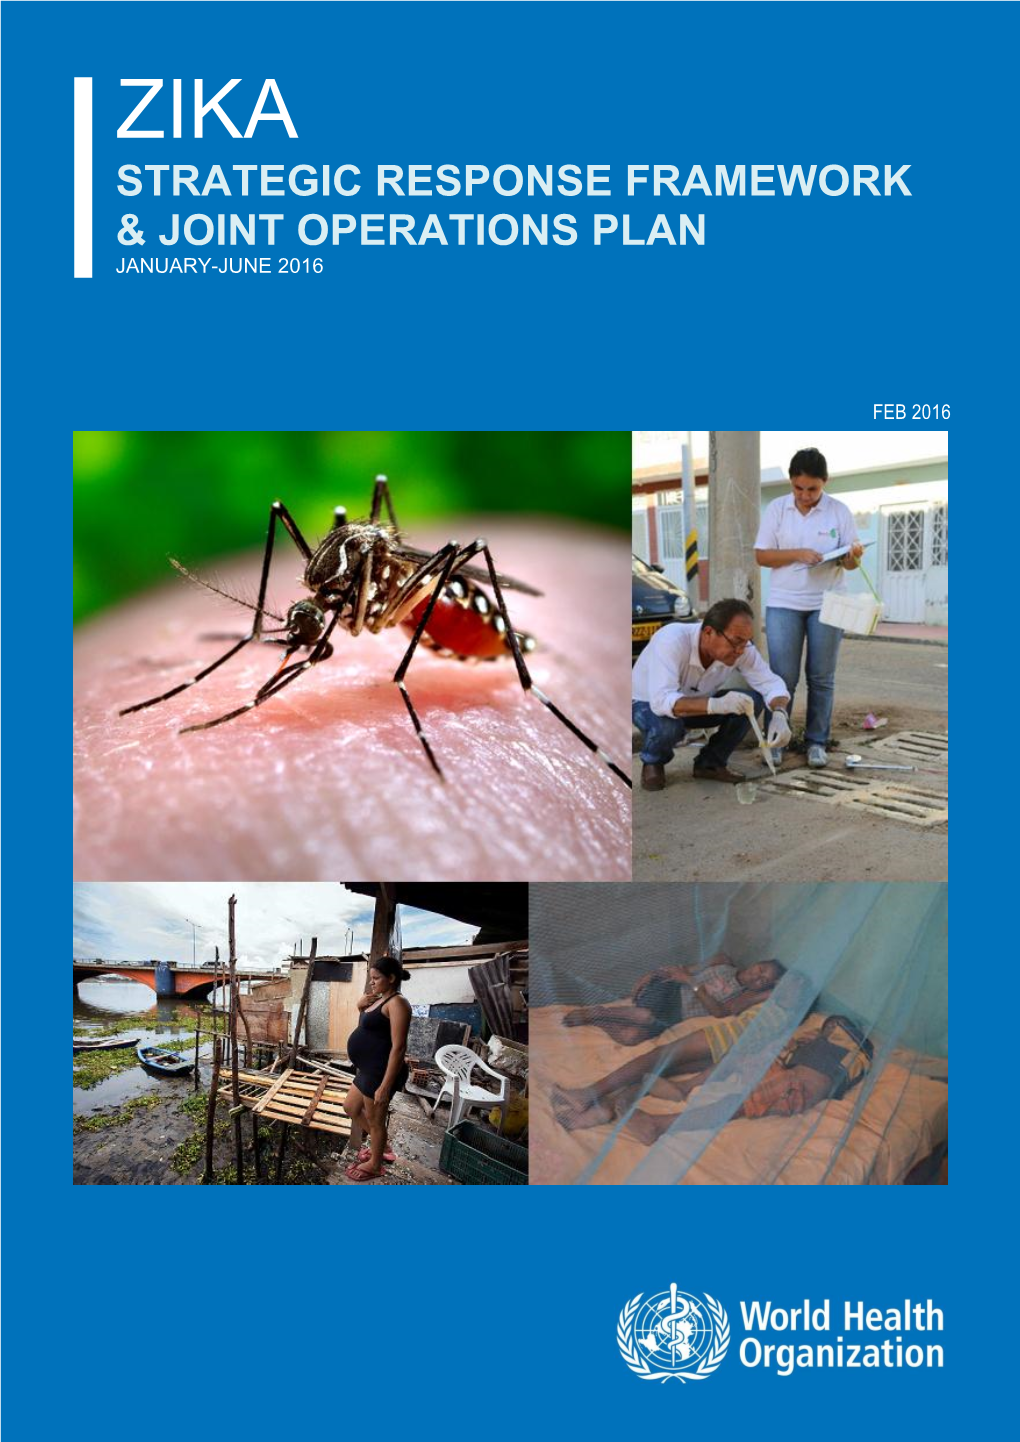 Zika: Strategic Response Framework & Joint Operations Plan